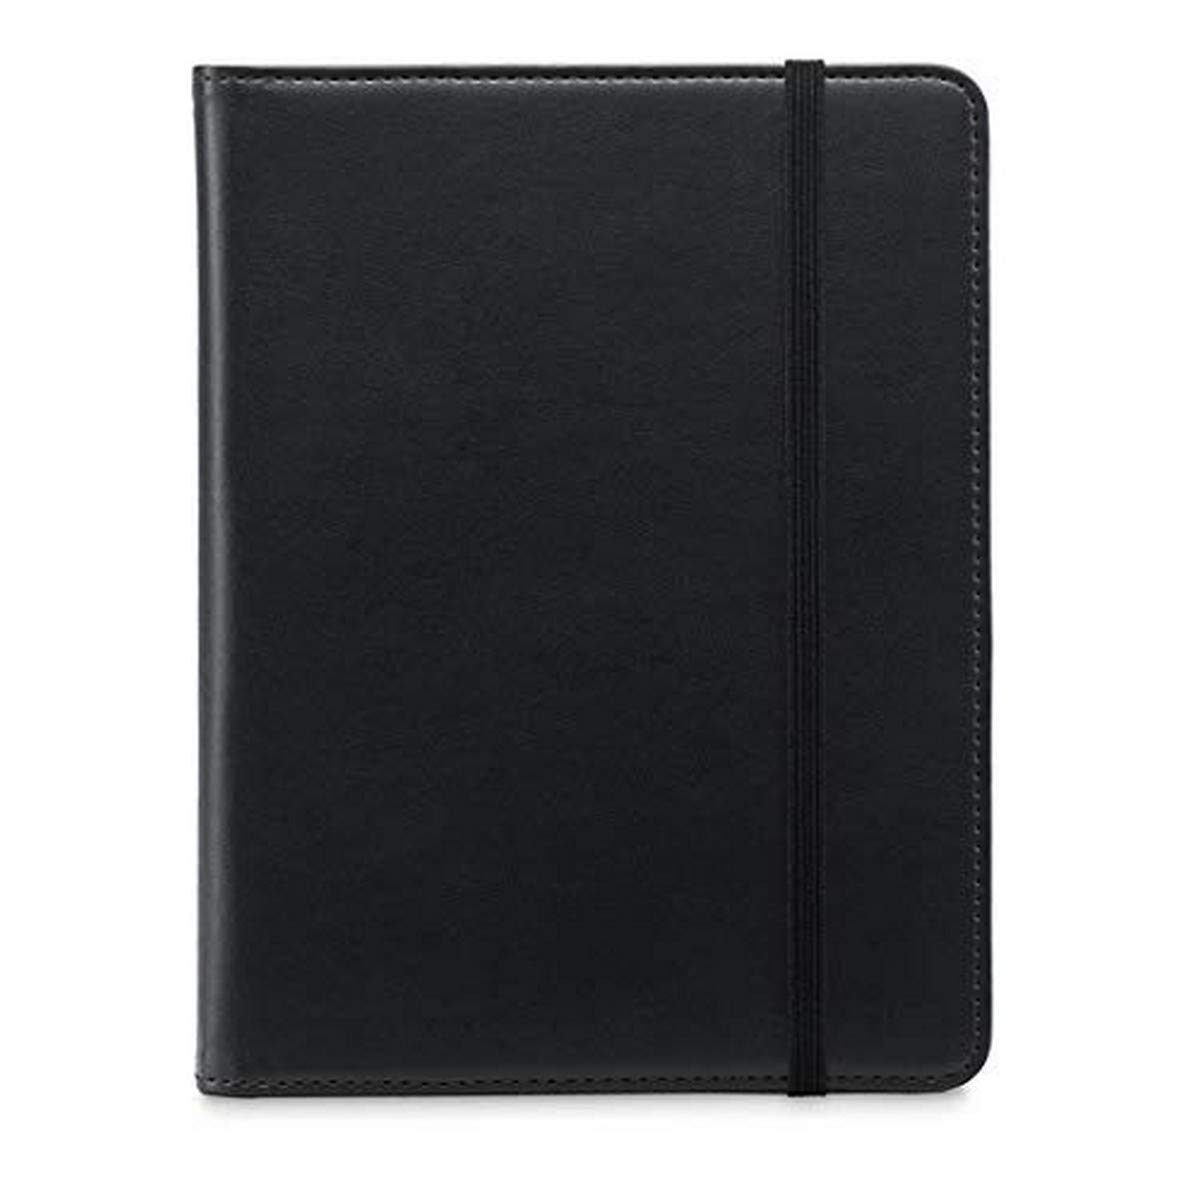 Moleskine Schutzhülle für iPad Mini 4, Schwarz